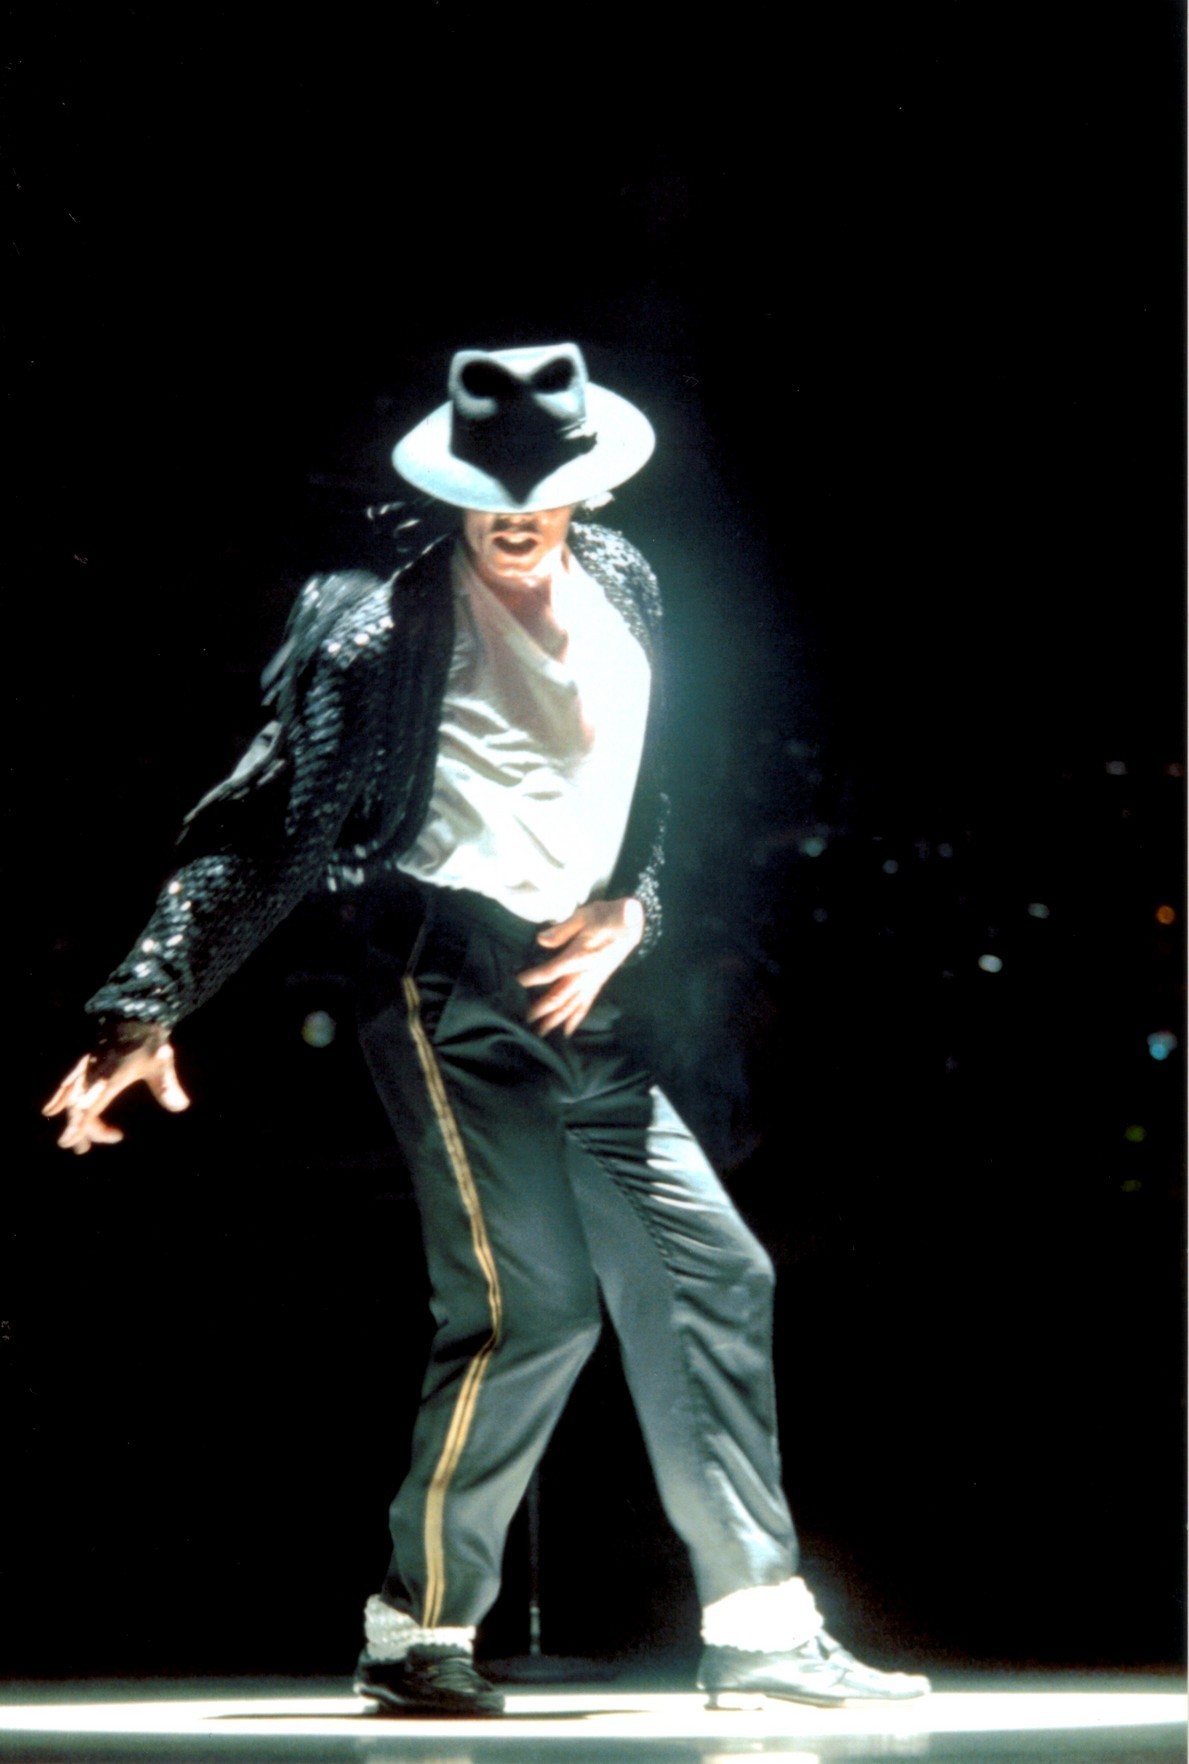 Michael Jackson Michael